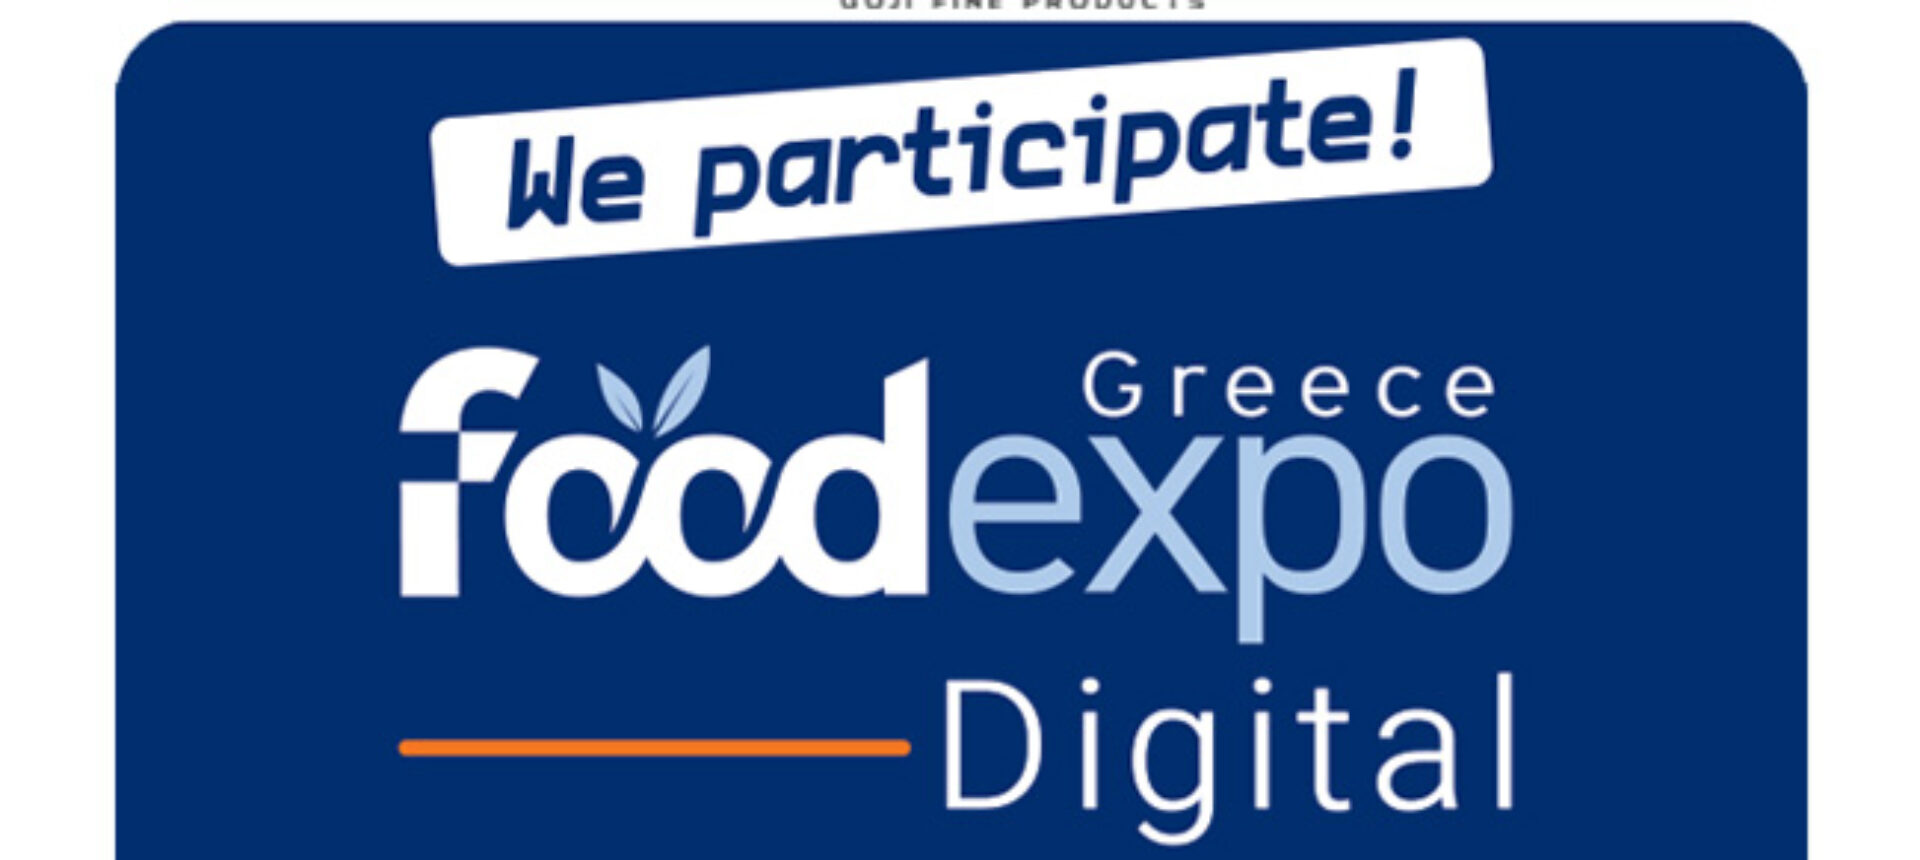 GOJI SPIRIT participates at FoodExpo Greece Digital 2021